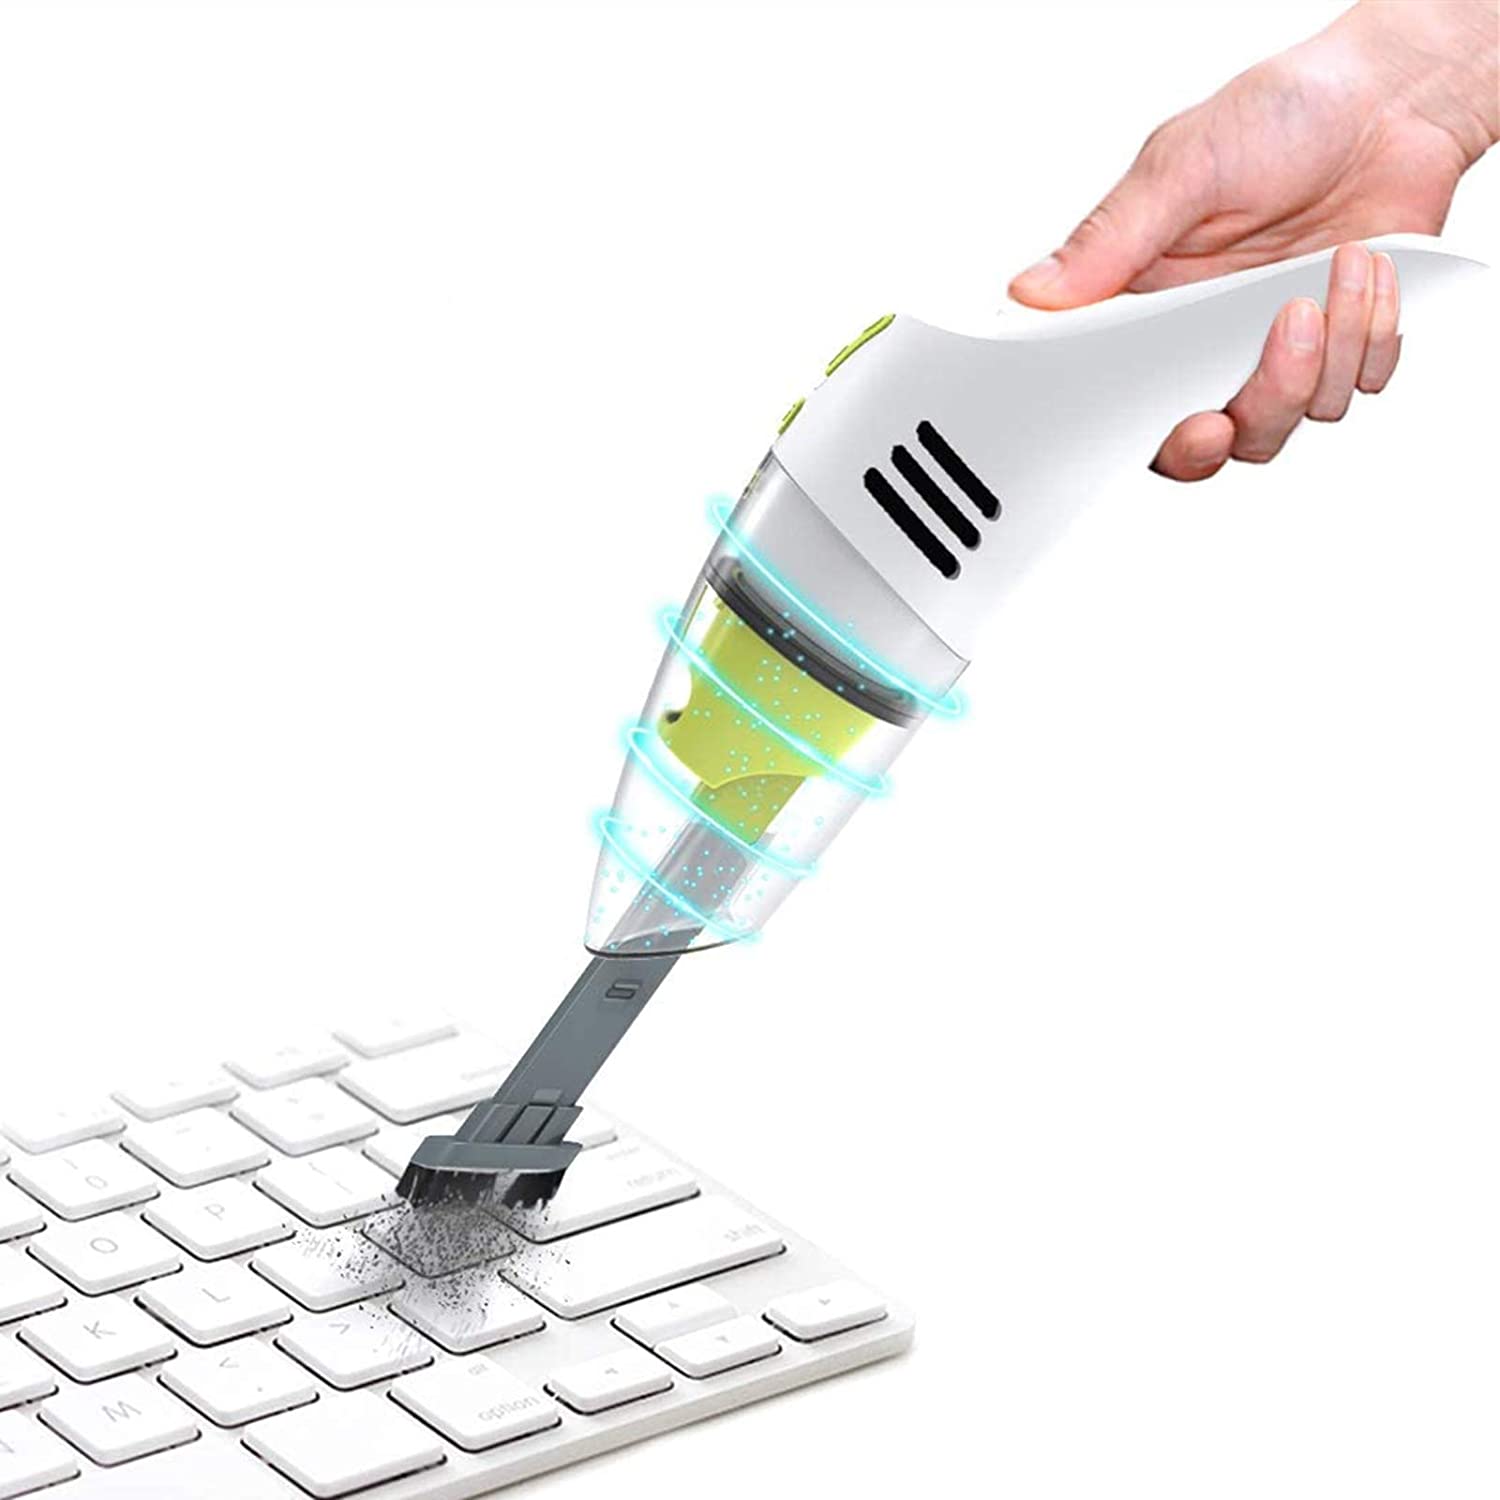 MECO Mini Vacuum / Keyboard  Cleaner $13.79 @ Amazon